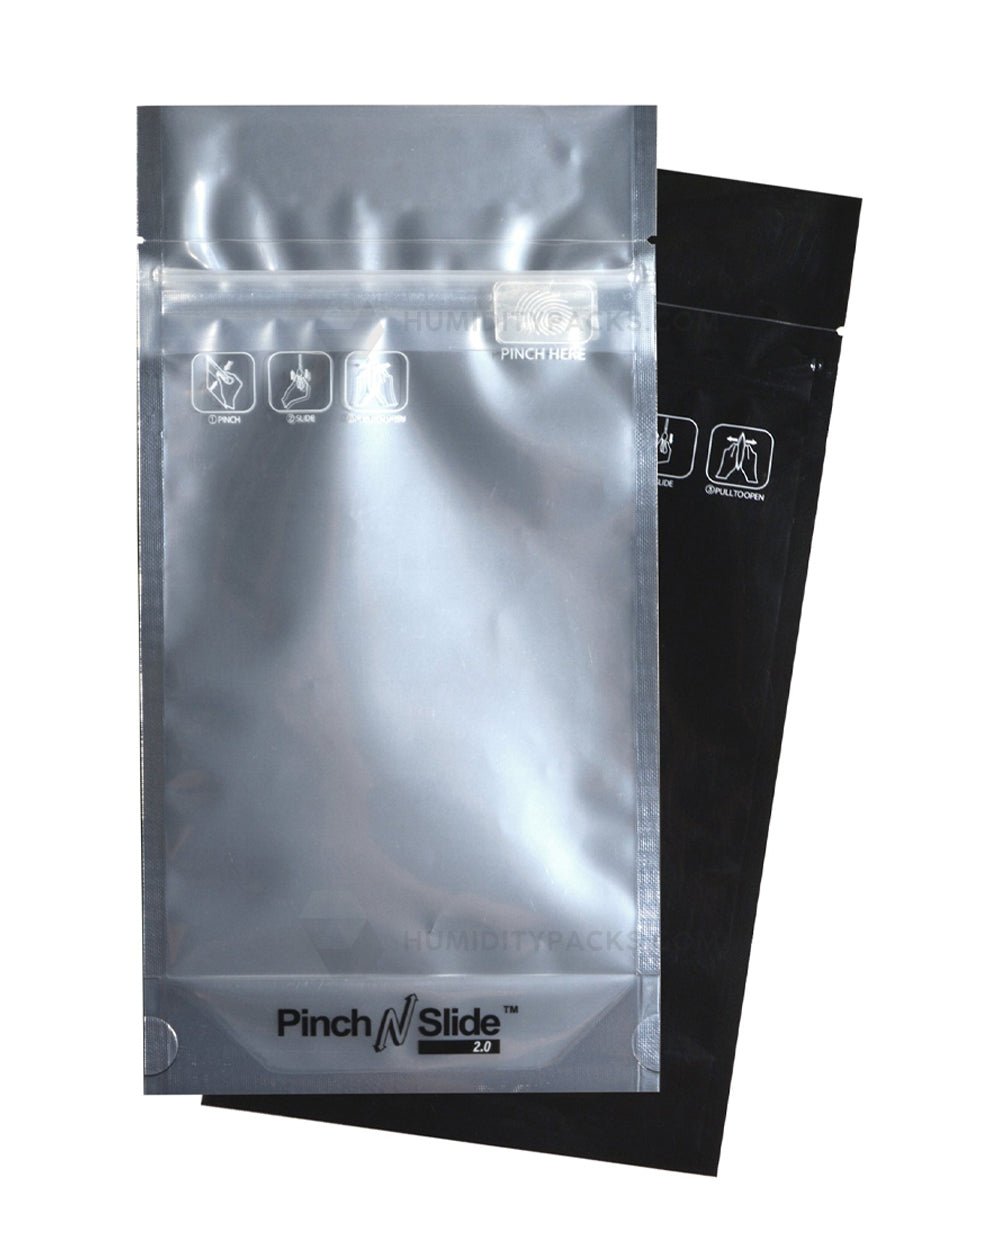 Black 5" x 8.5" Pinch N Slide 2.0 Mylar Child Resistant & Tamper Evident Vista Bags (14 grams) 250/Box Humidity Packs - 1